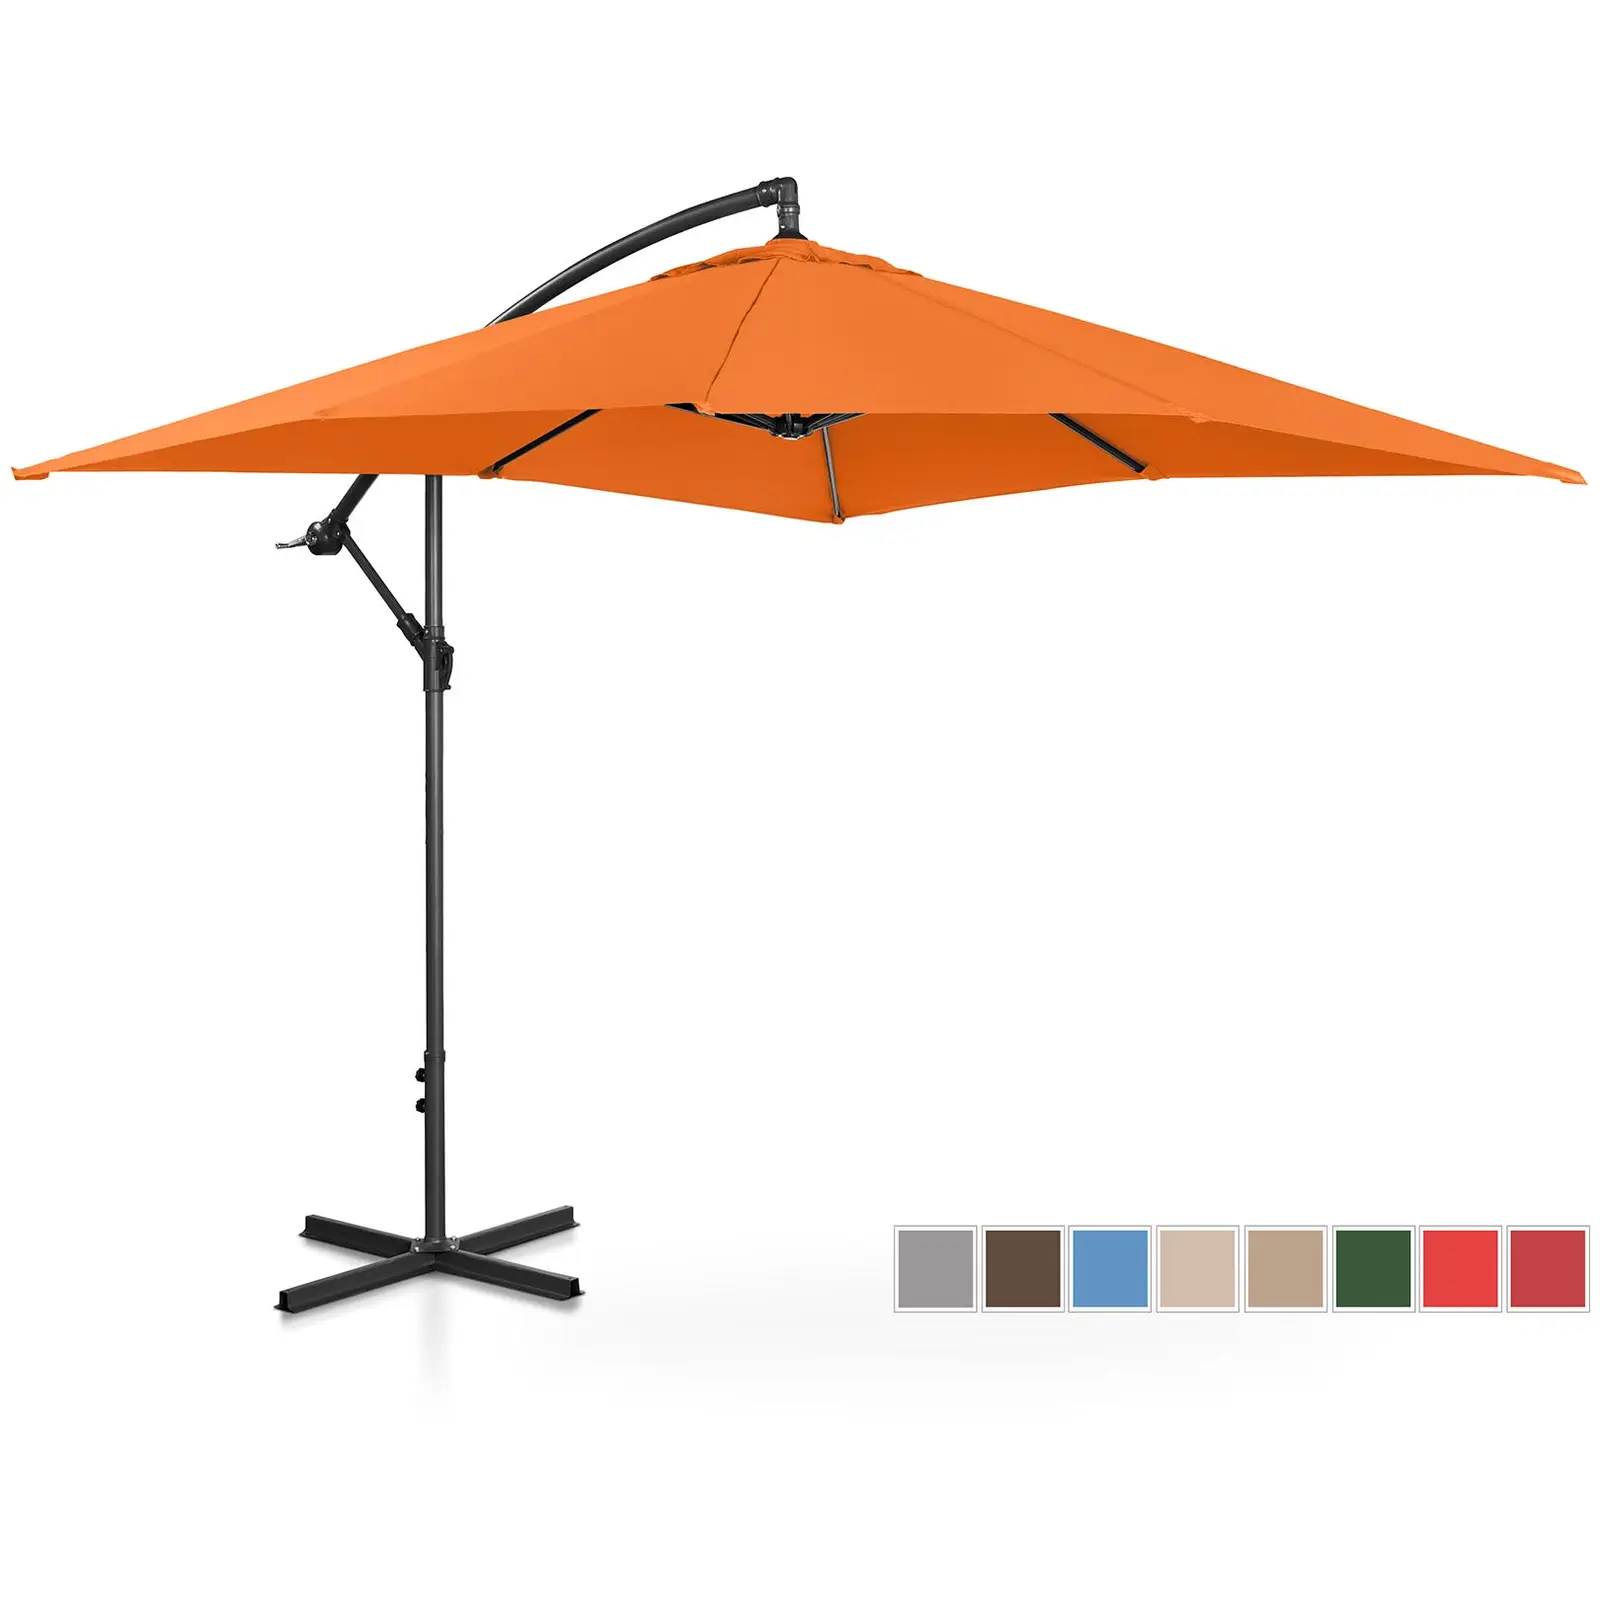 Hængeparasol - orange - rektangulær - 250 x 250 cm - knæk-position